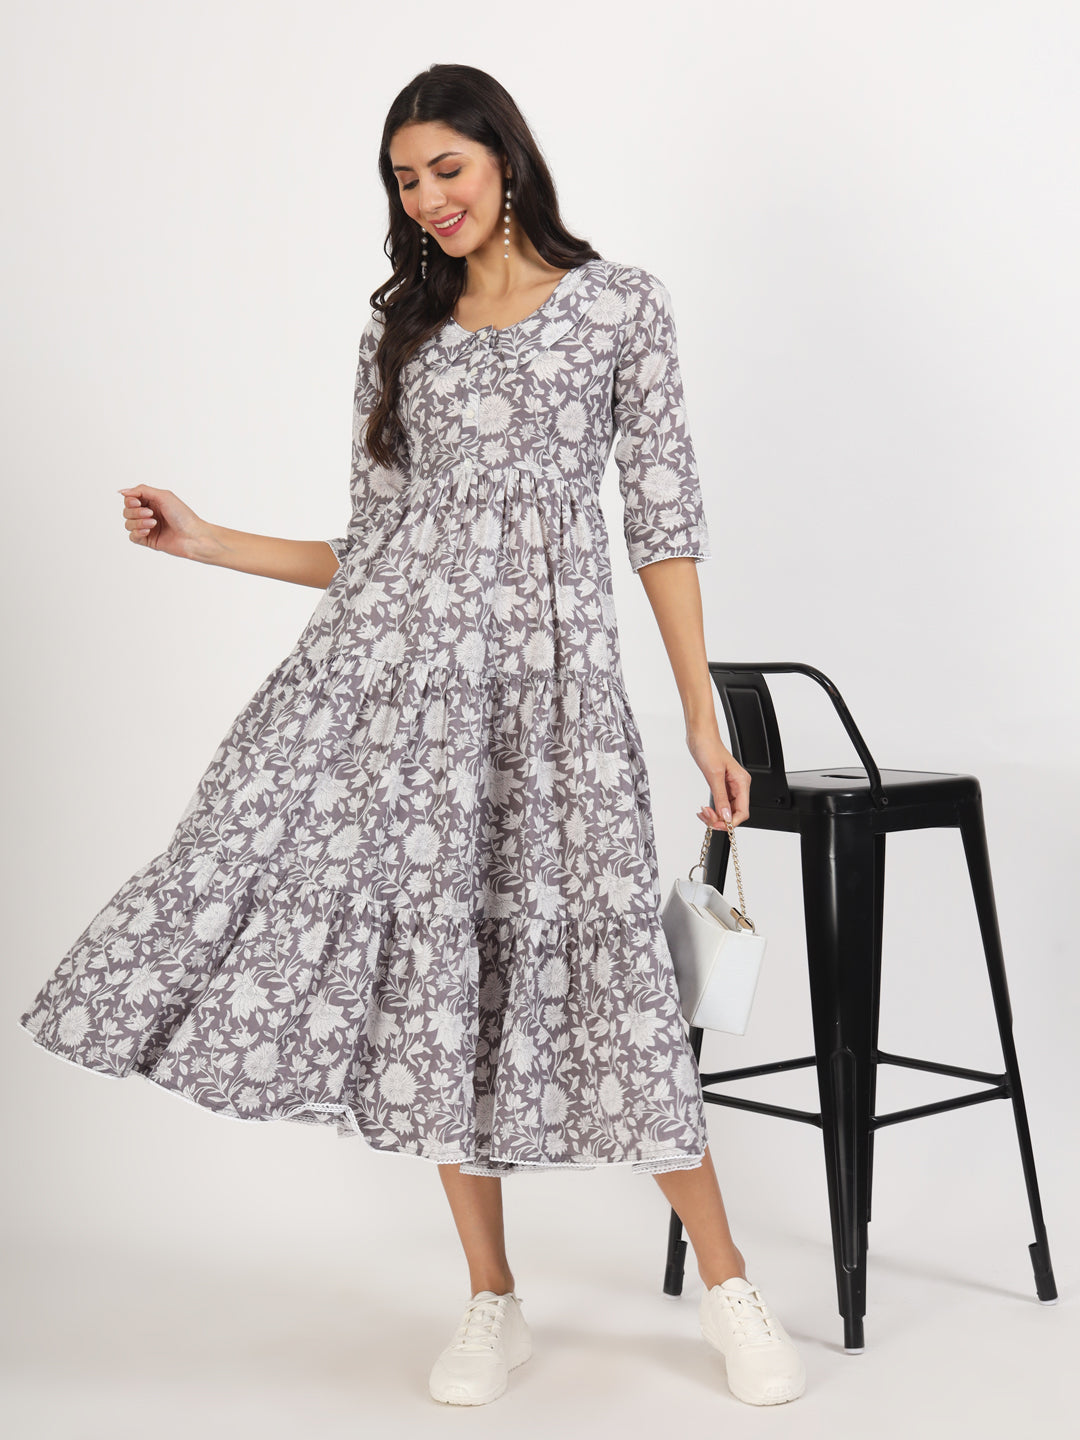 Divena Grey Floral Printed Cotton Dress